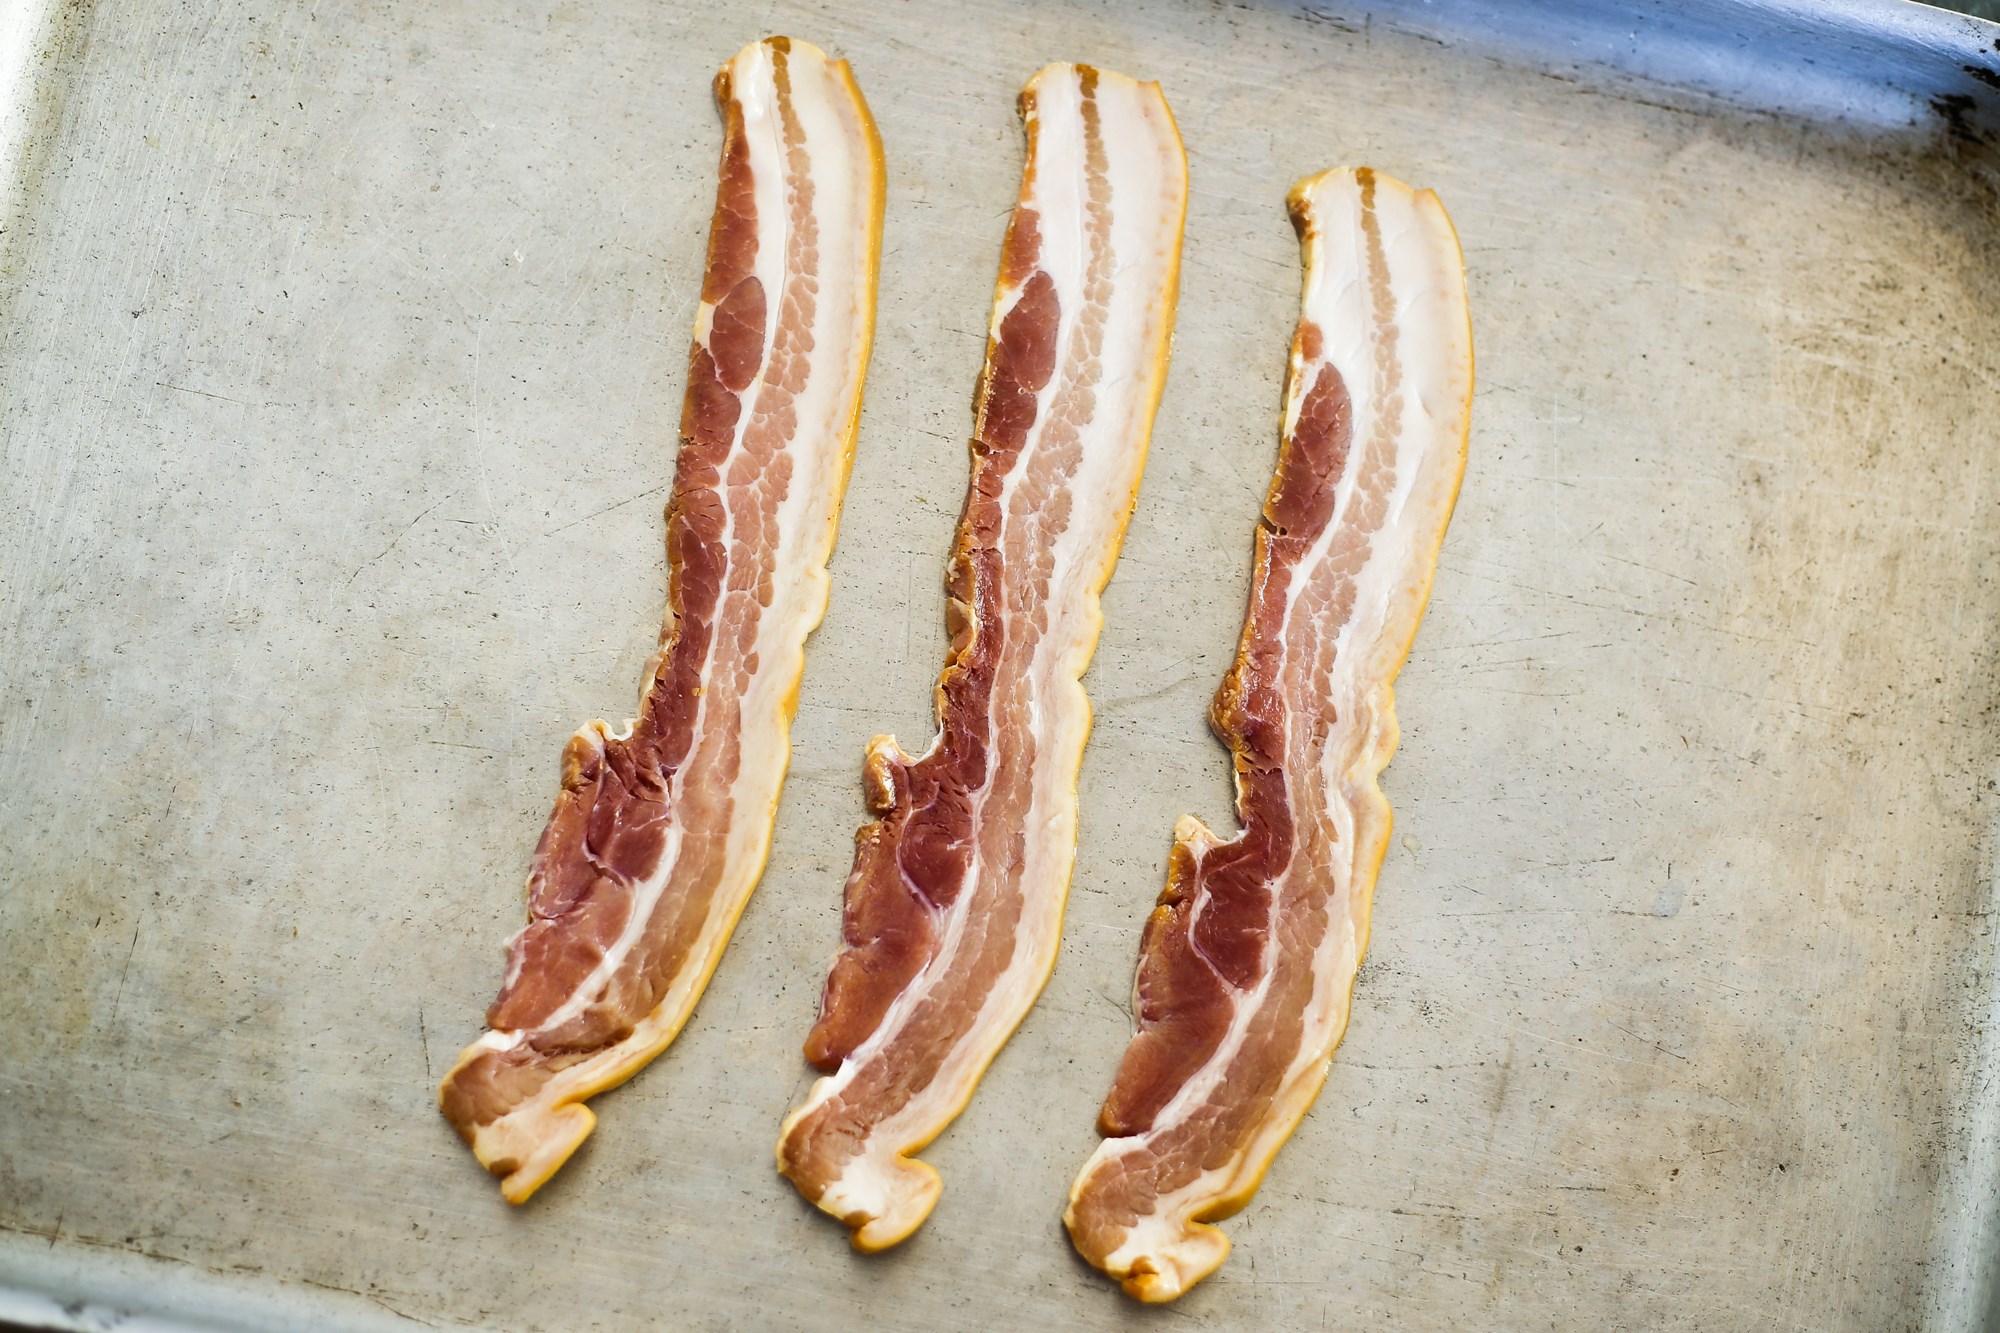 Smoked streaky bacon slices